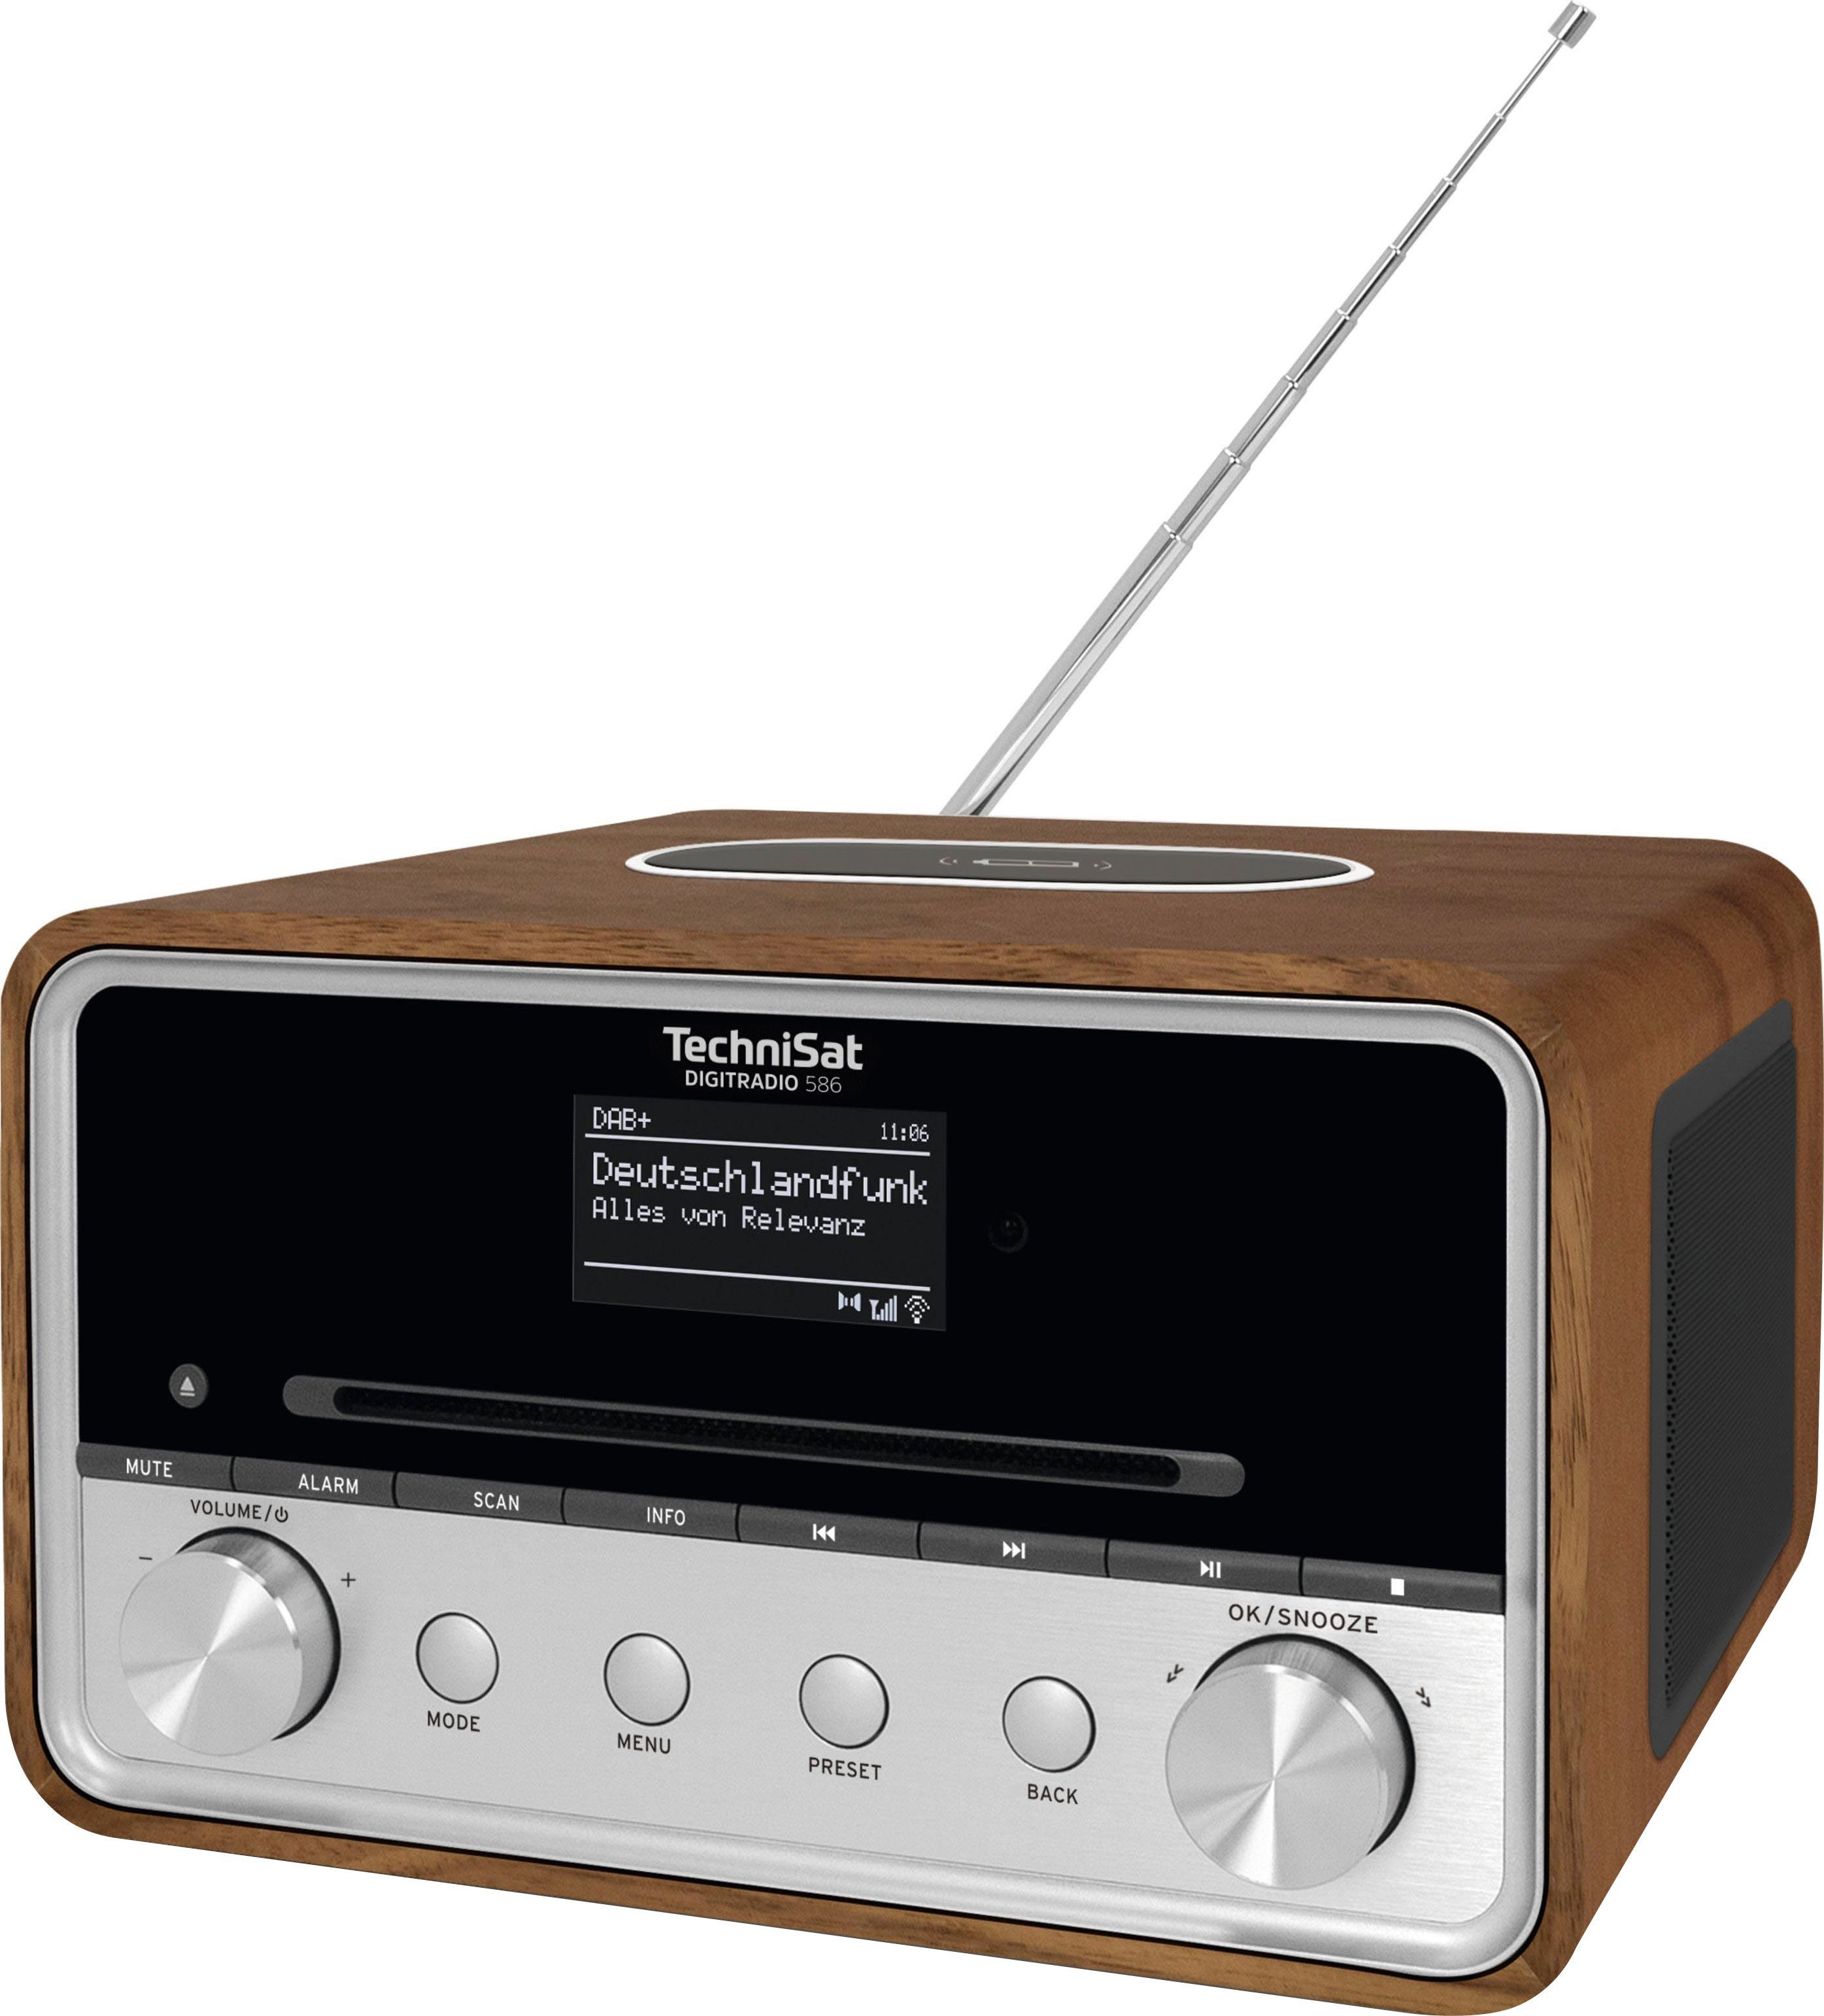 TechniSat DIGITRADIO 586 UKW Radio W) RDS, 20 (DAB), (Digitalradio mit Internetradio, Nussbaum